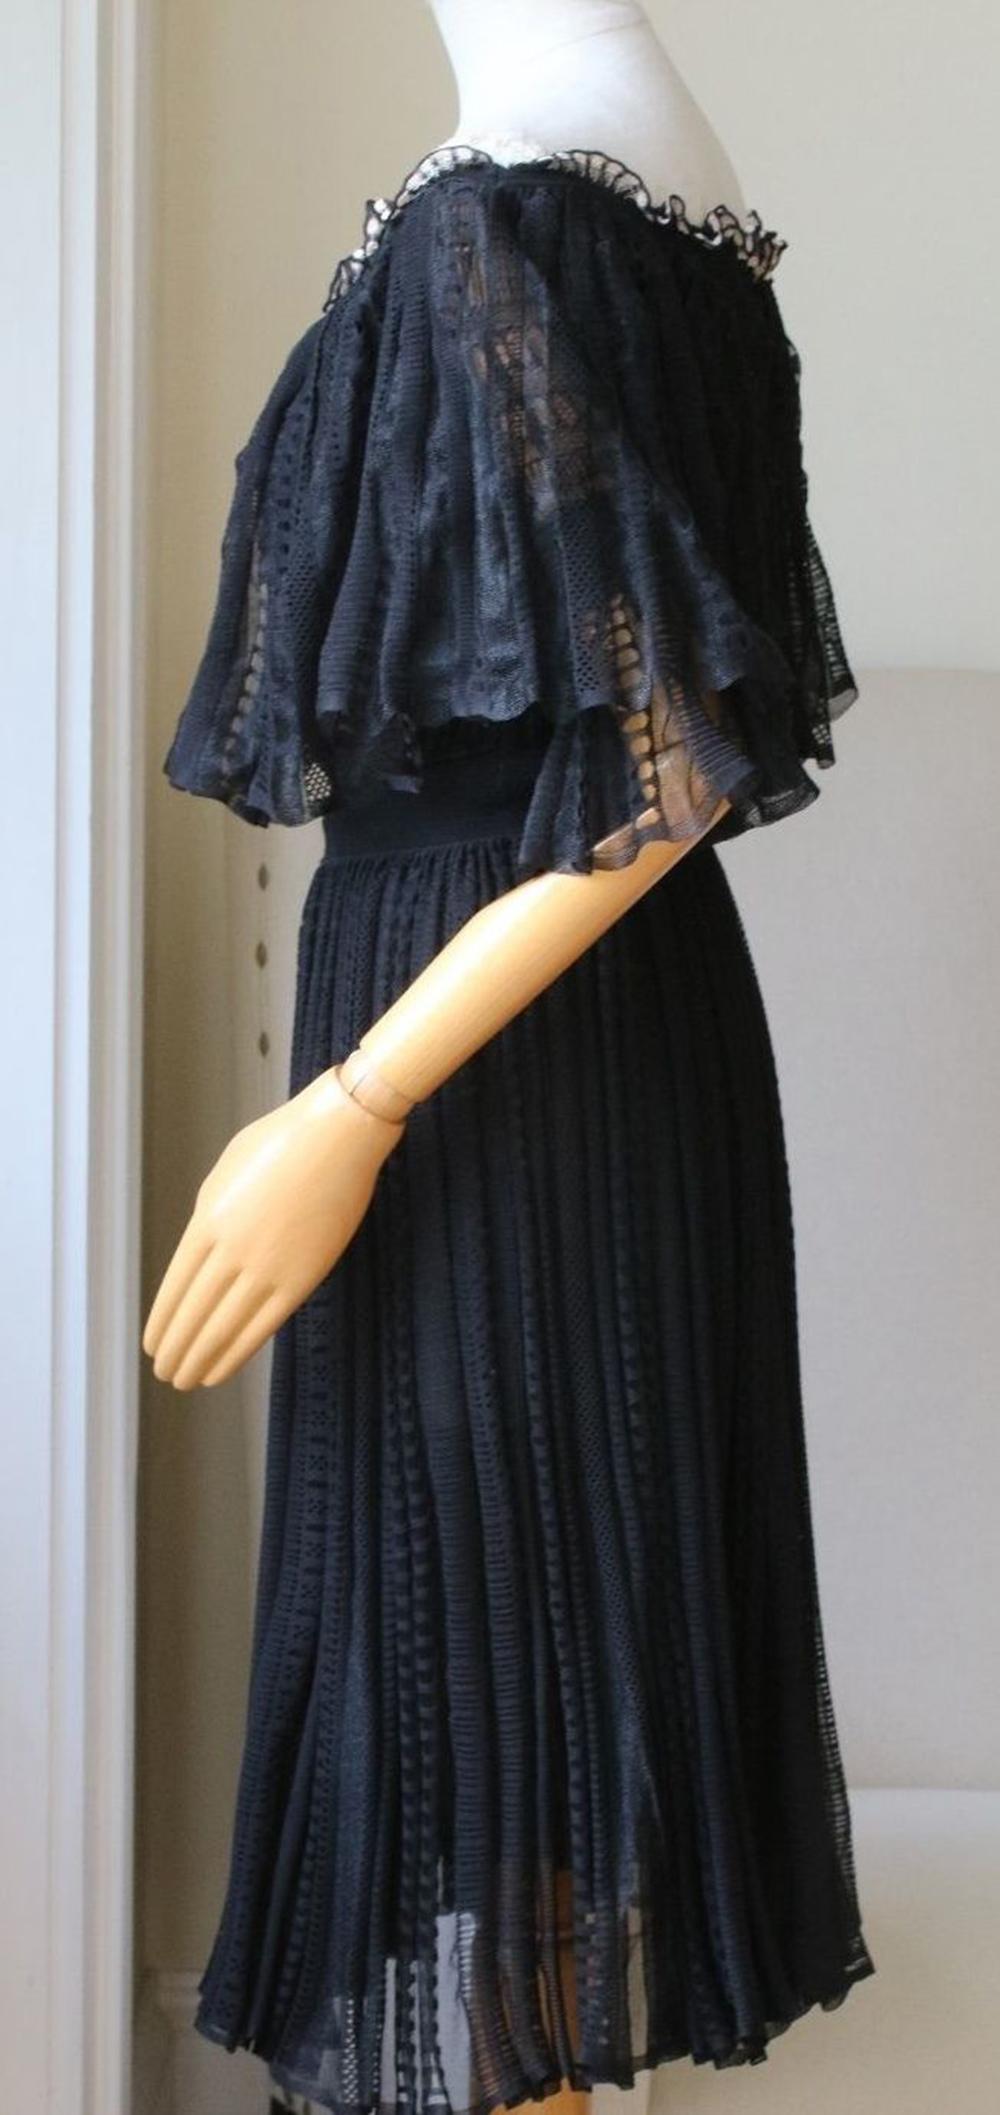 Black Alexander McQueen Off-The-Shoulder Ruffled Knitted Dress